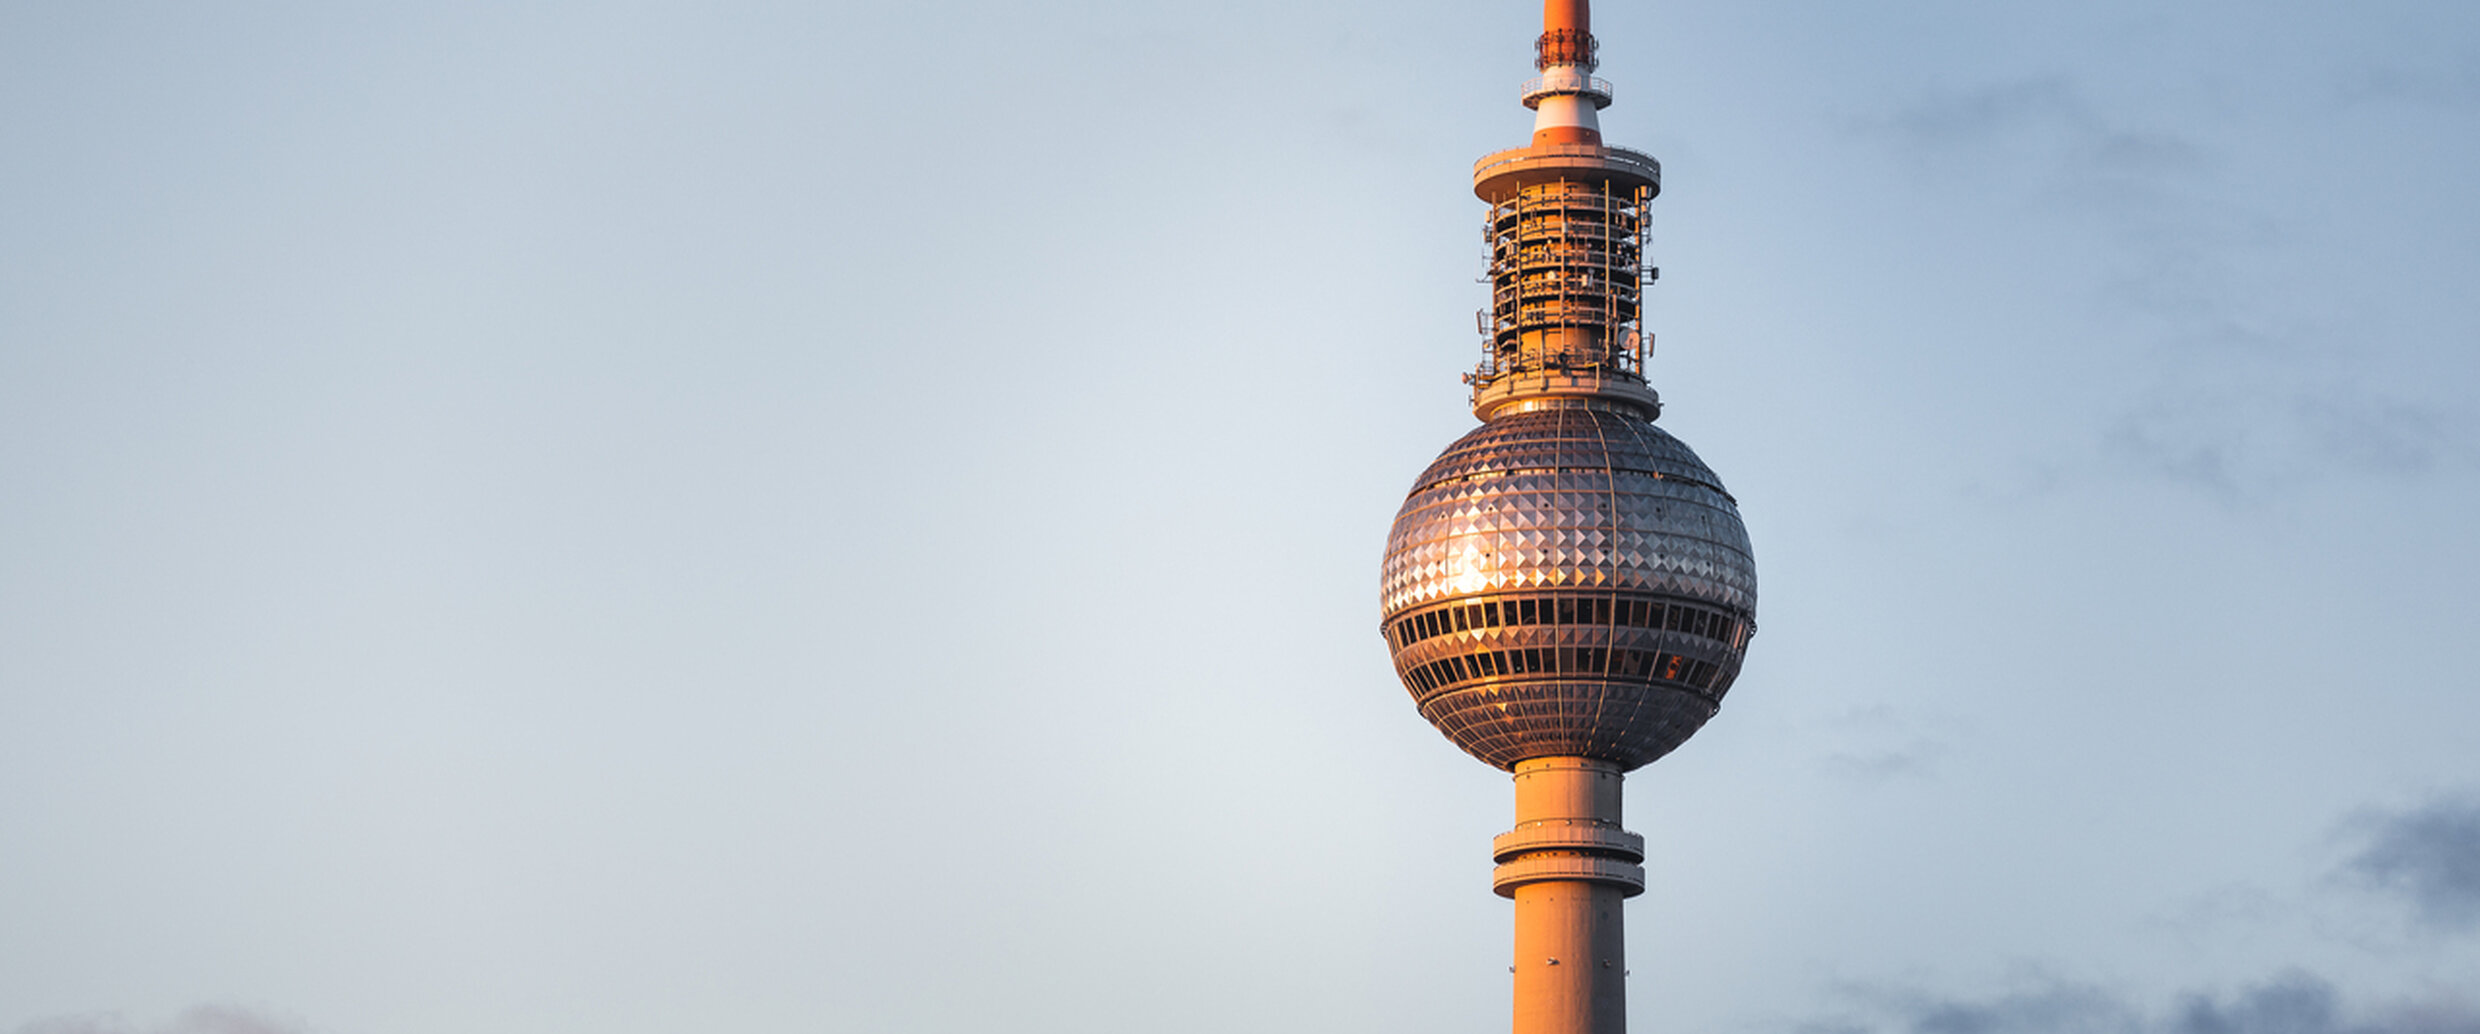 Vores firma Mistillid Mobilisere Berlin's Top 10 Attractions - places to visit in Berlin | visitBerlin.de